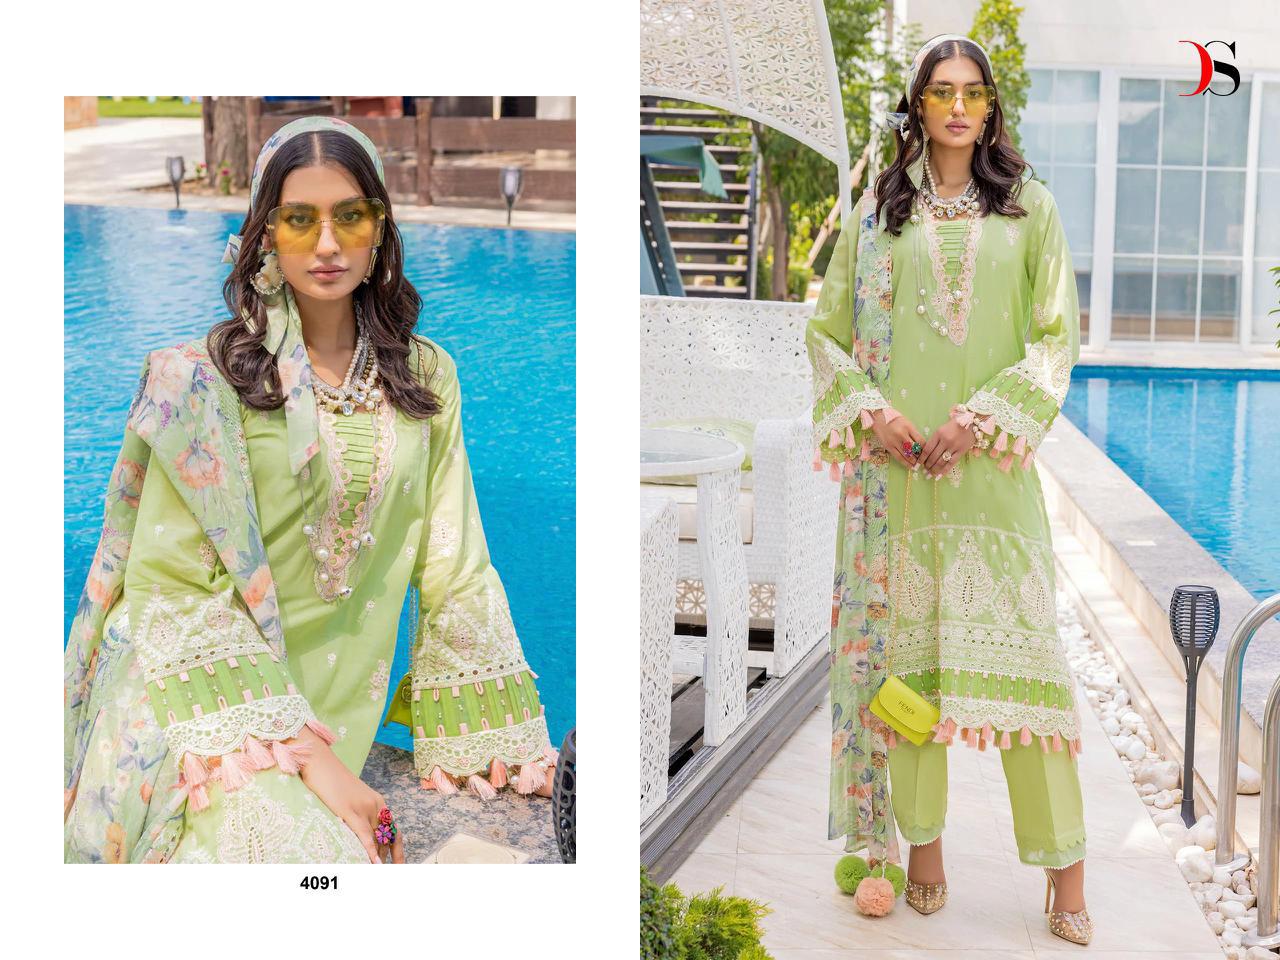 Adans Libas Inlays 24 Deepsy Cotton Pakistani Salwar Suits